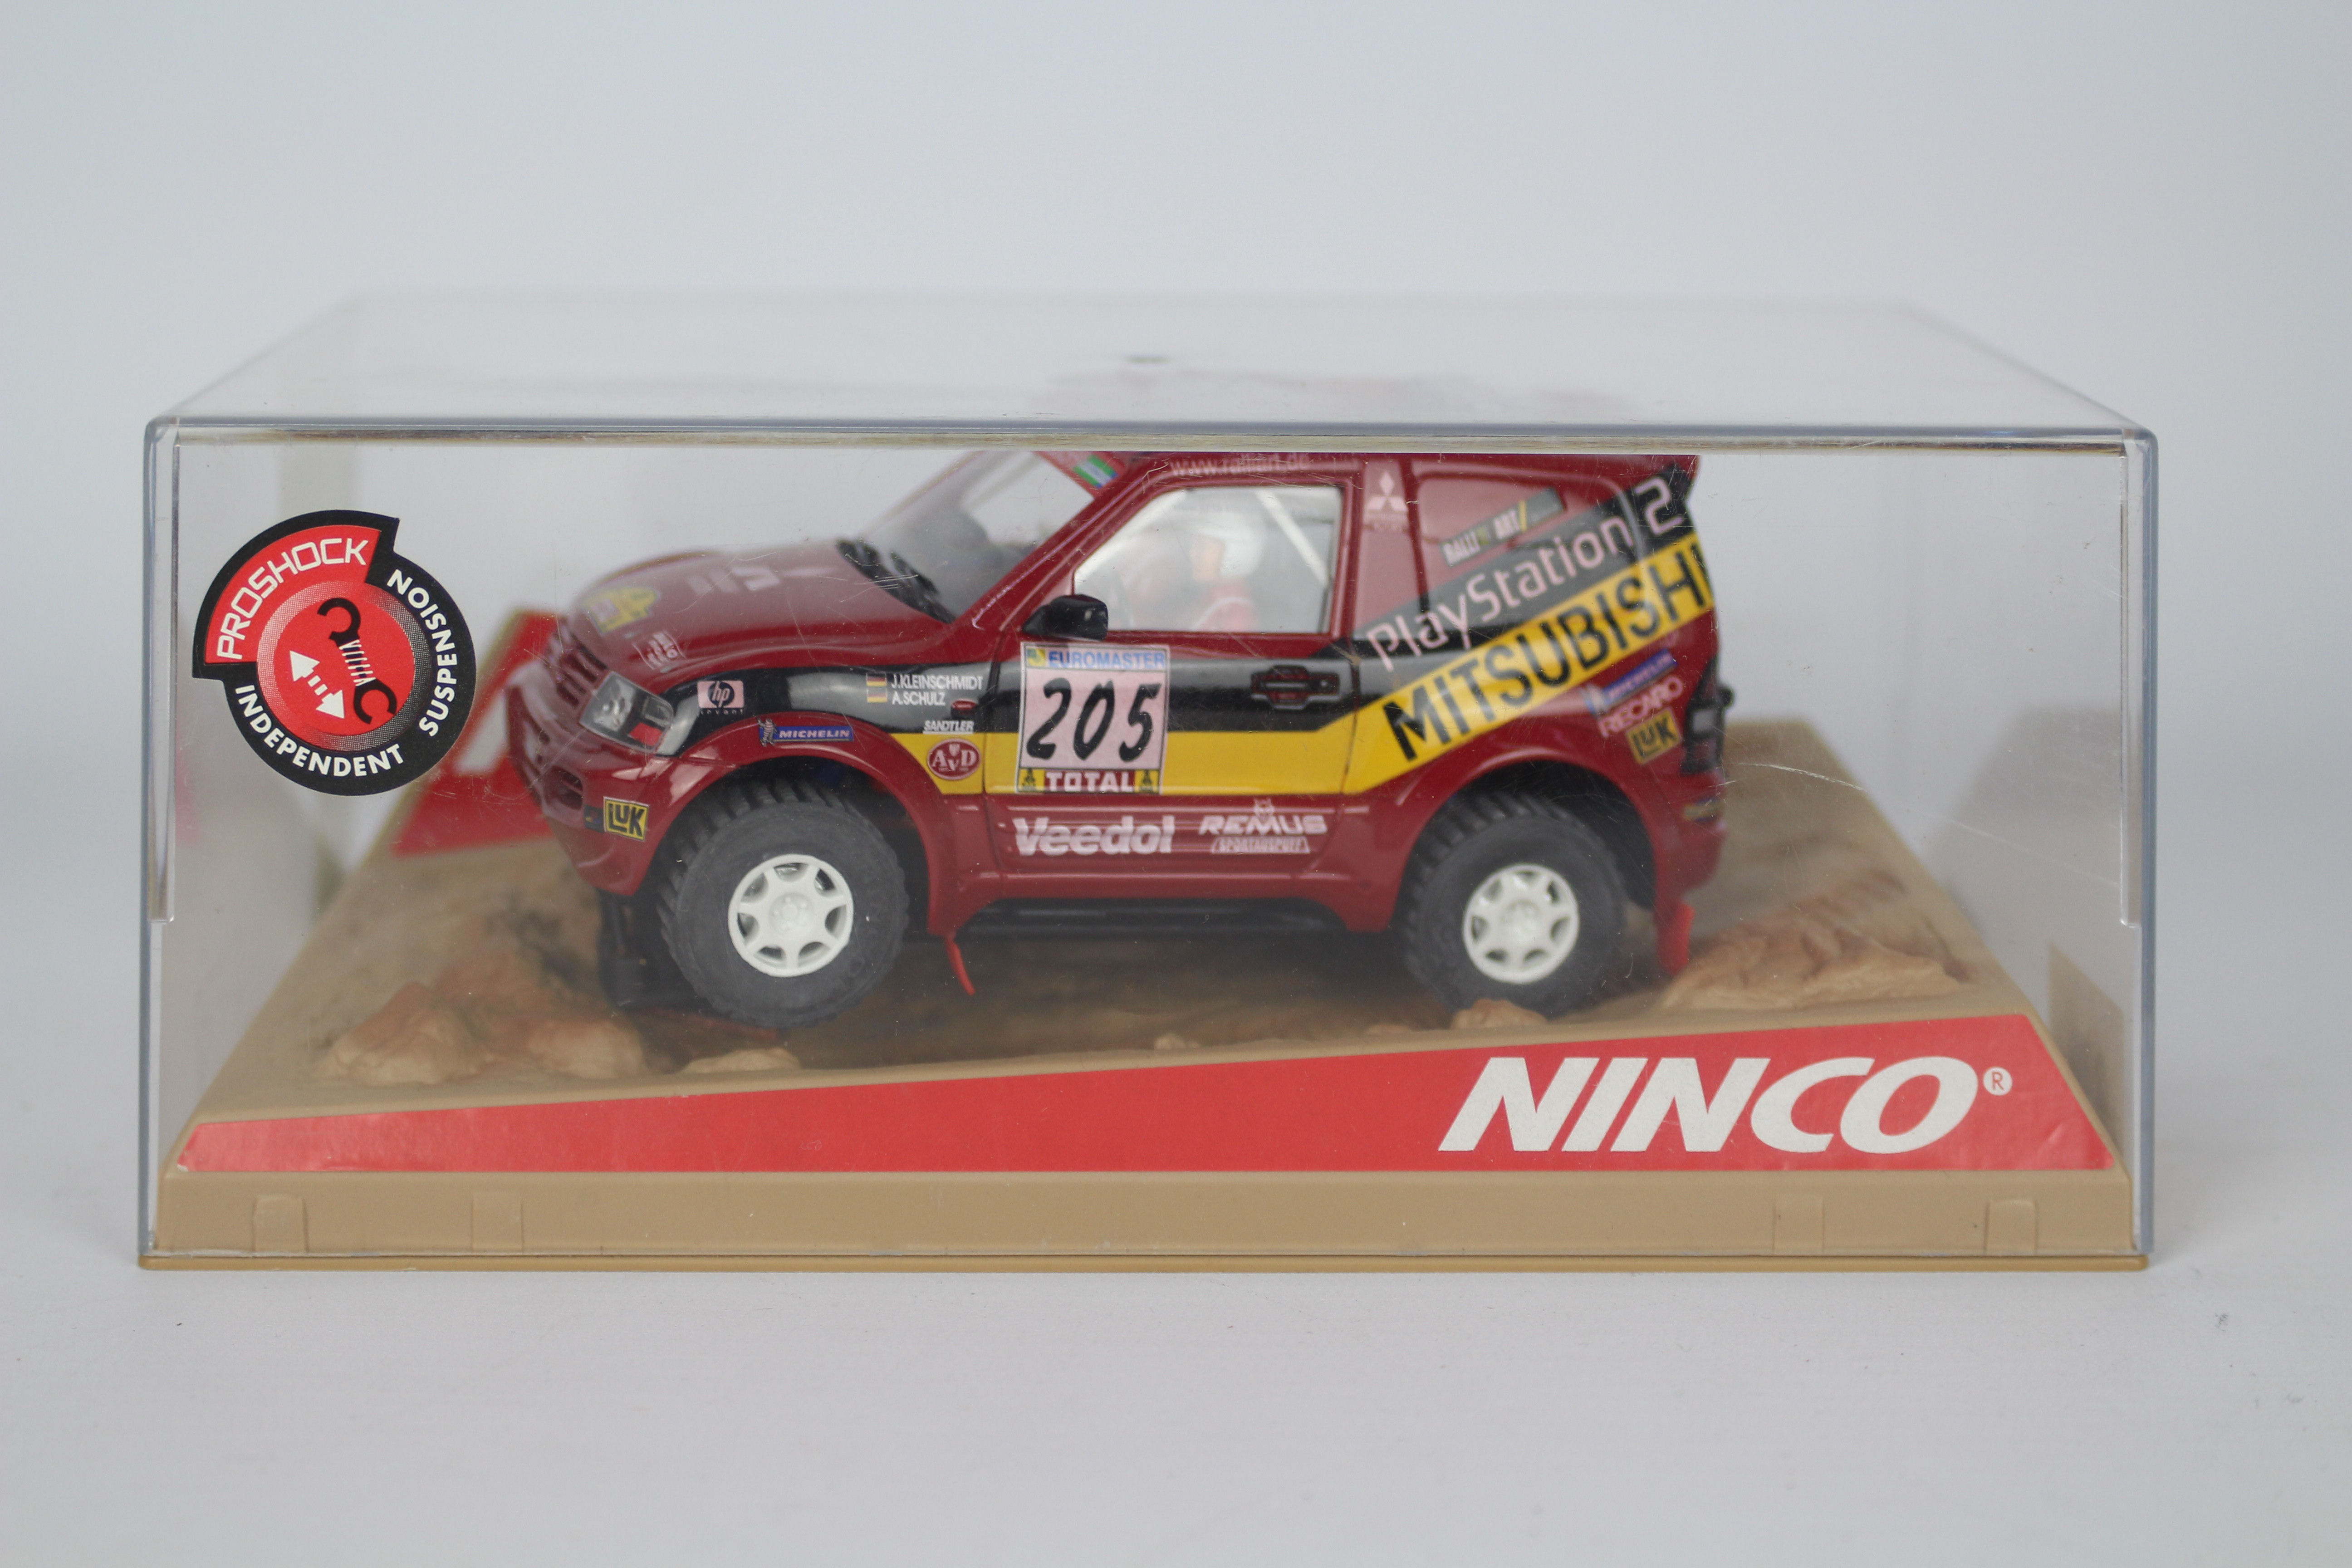 Ninco - A boxed Mitsubishi Pajero Rally # 50305.